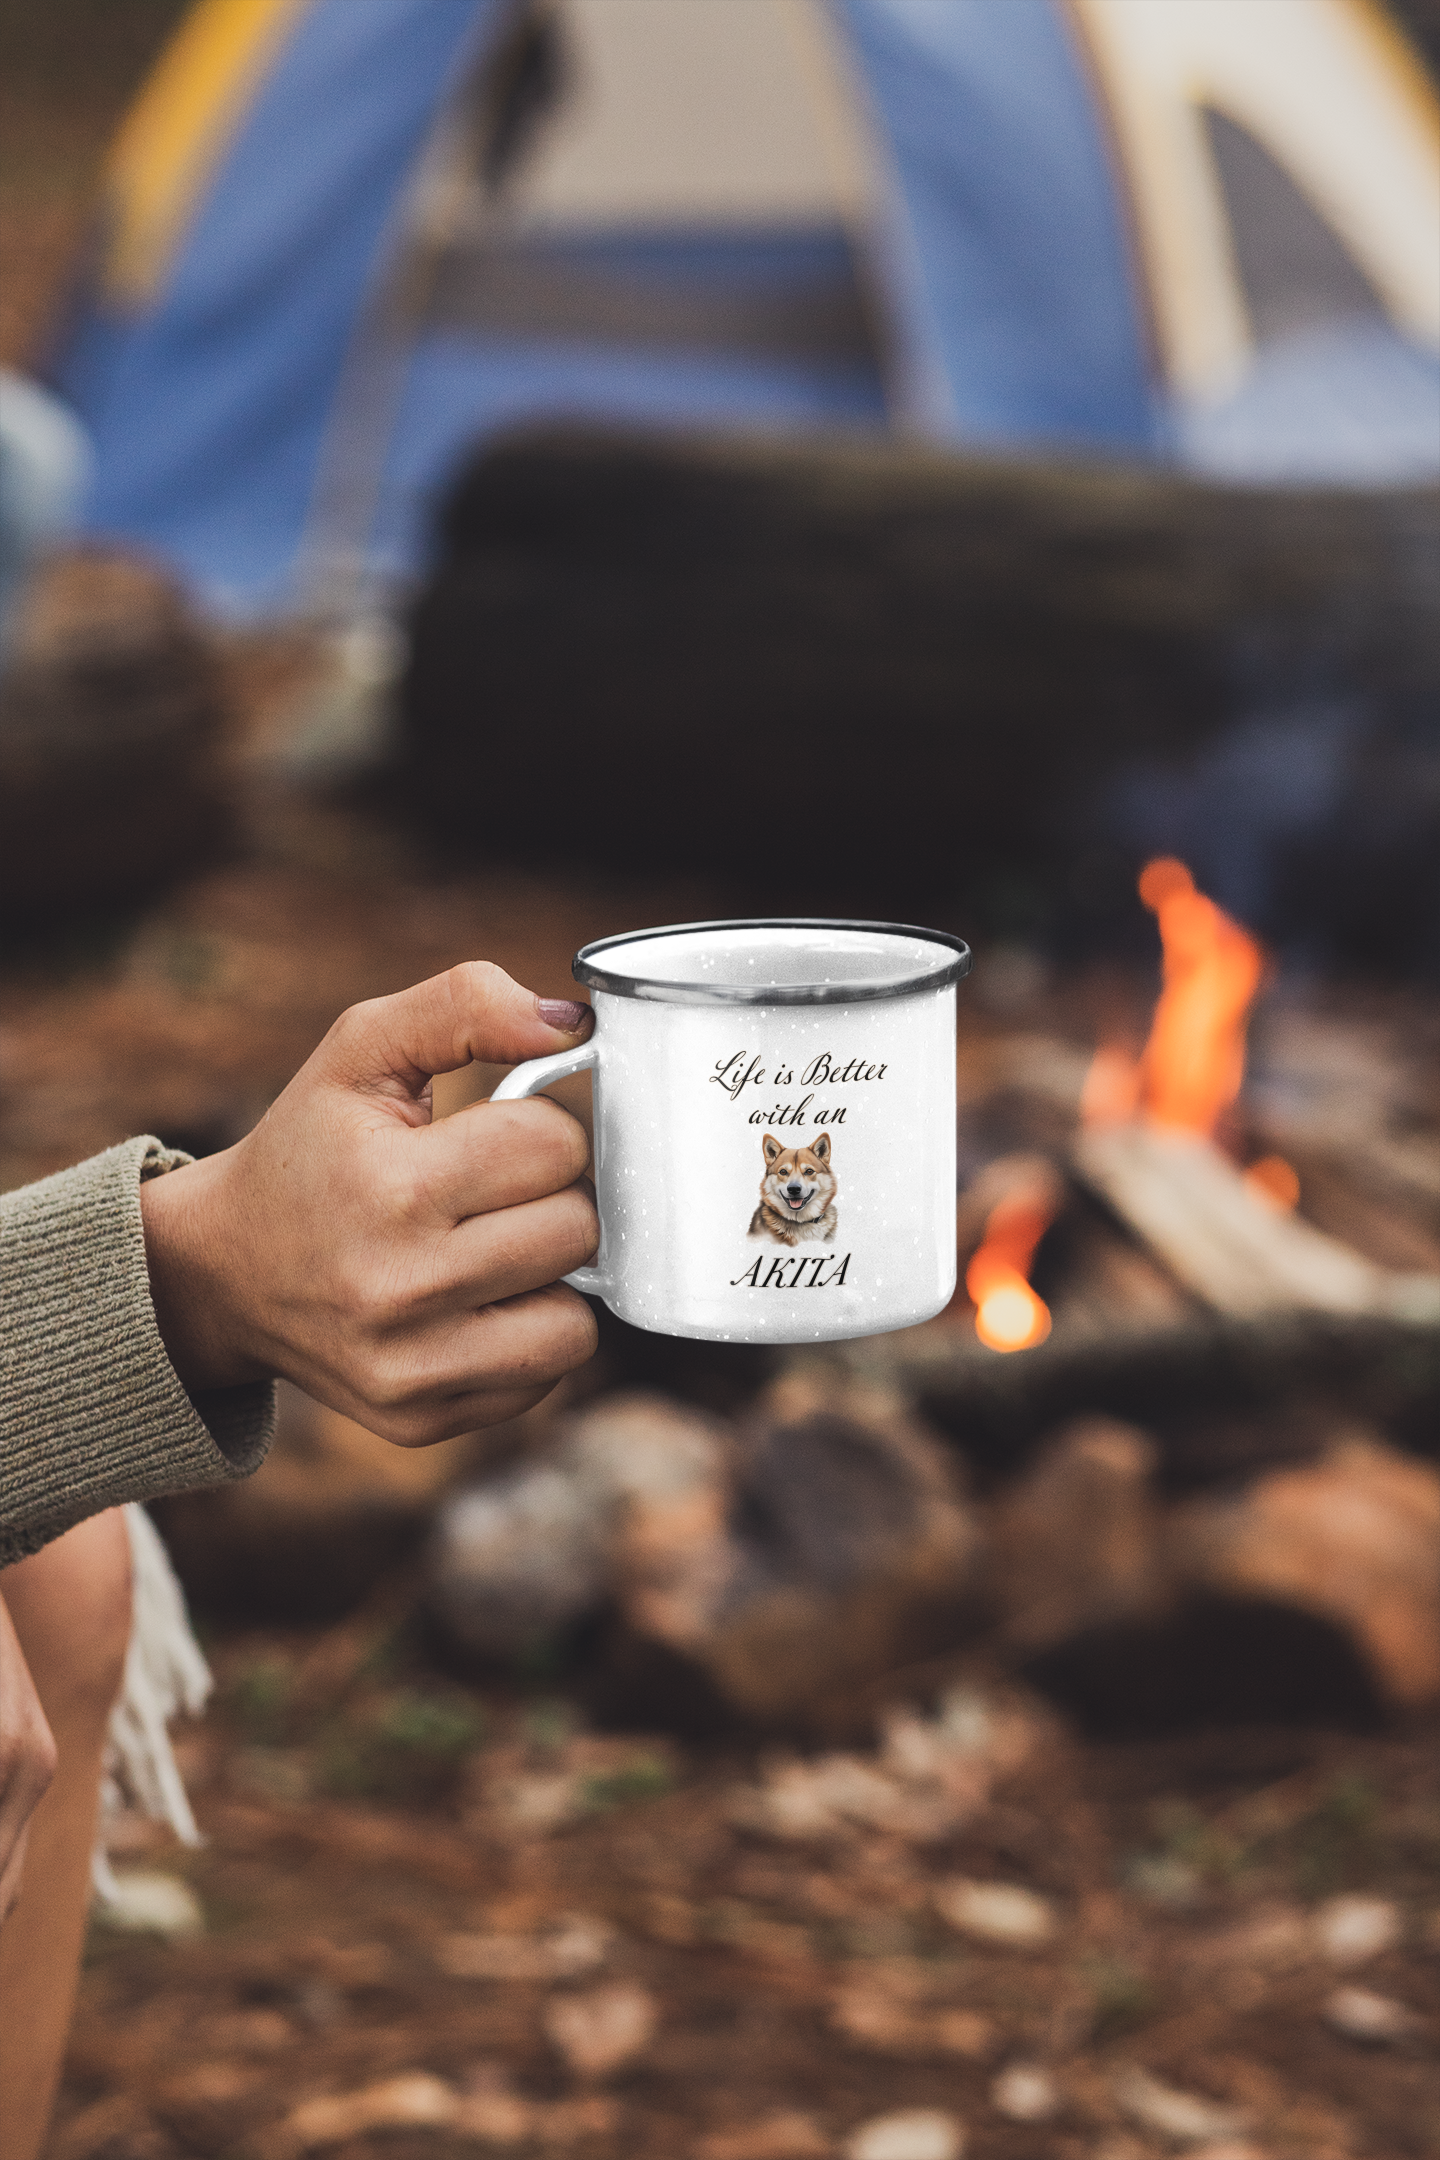 Life is Better with an Akita Enamel Camping Mug